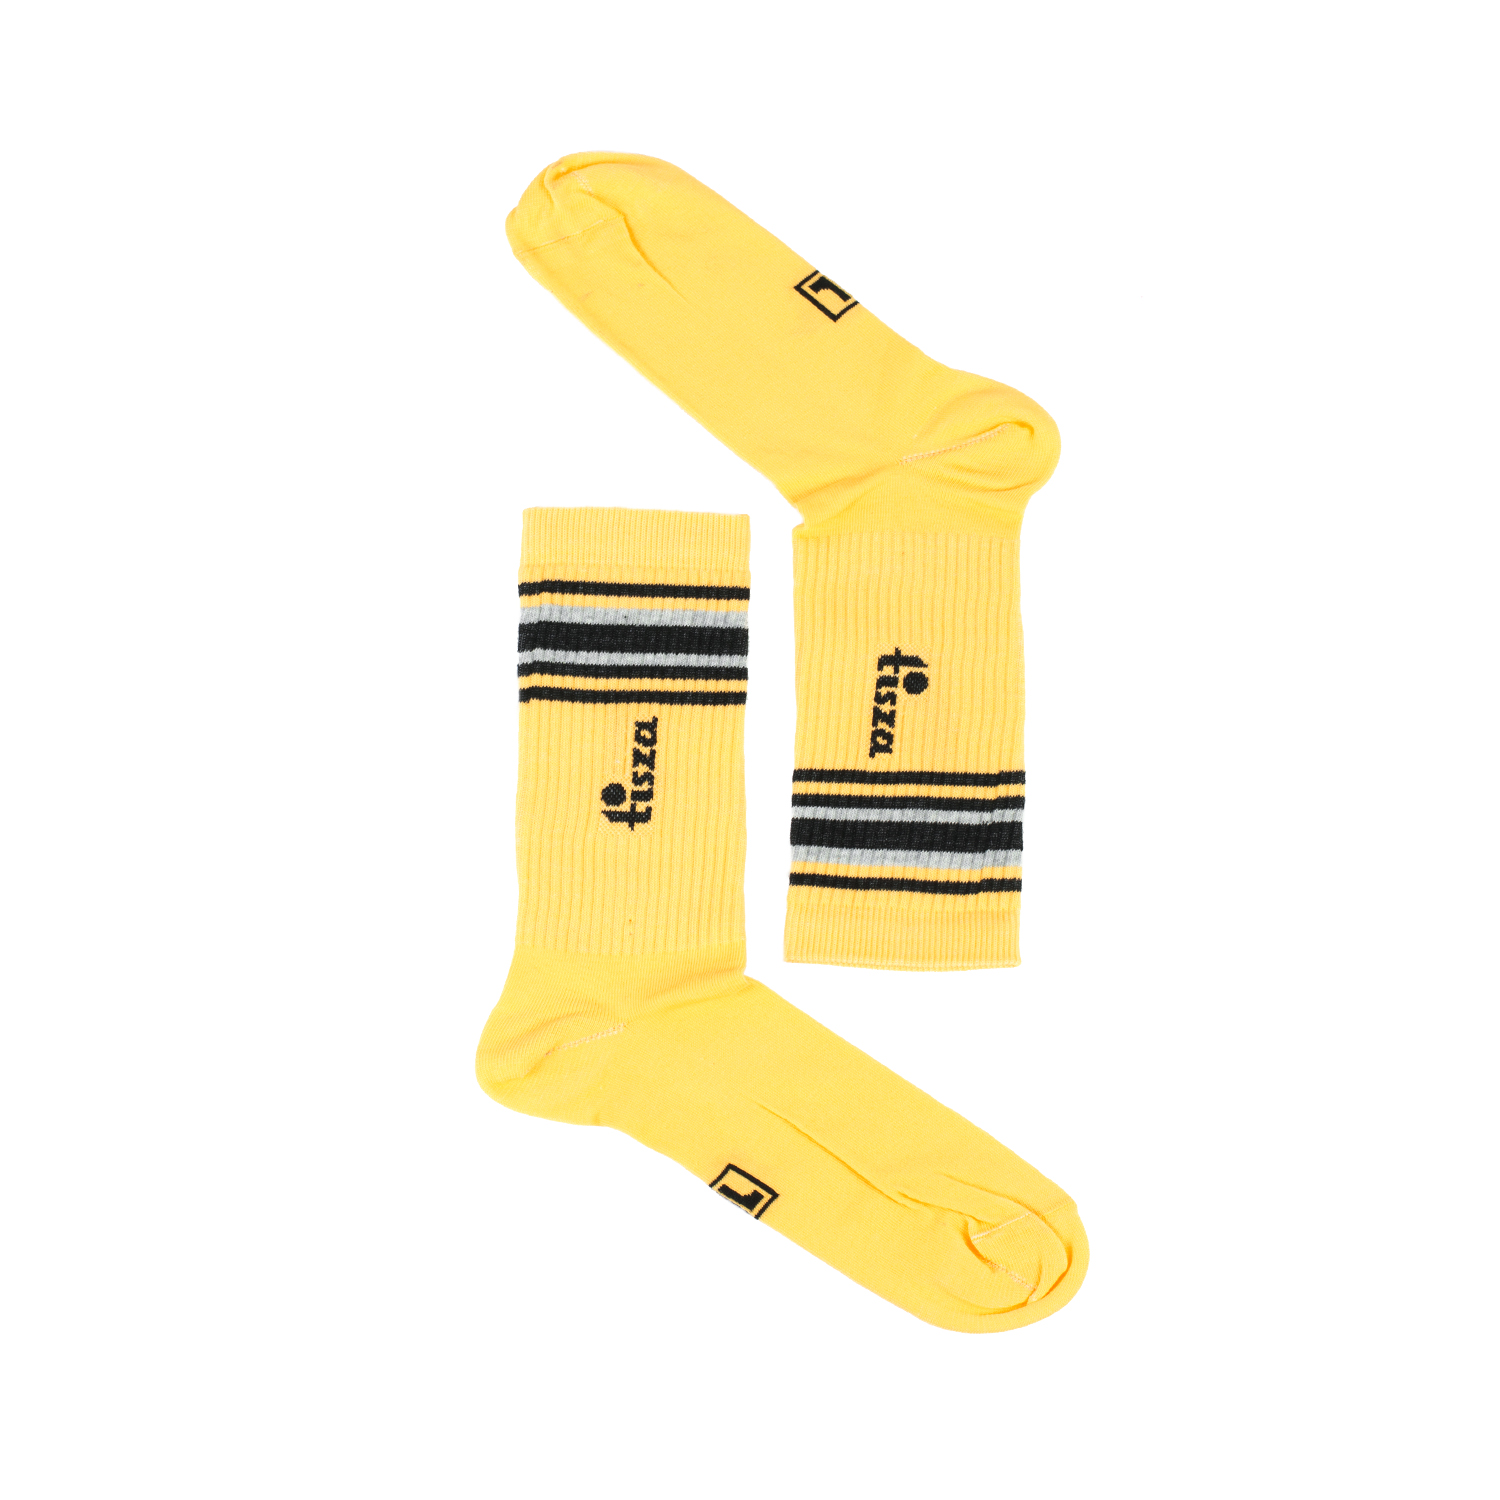 Tisza shoes- Socks- Mustard-black-grey